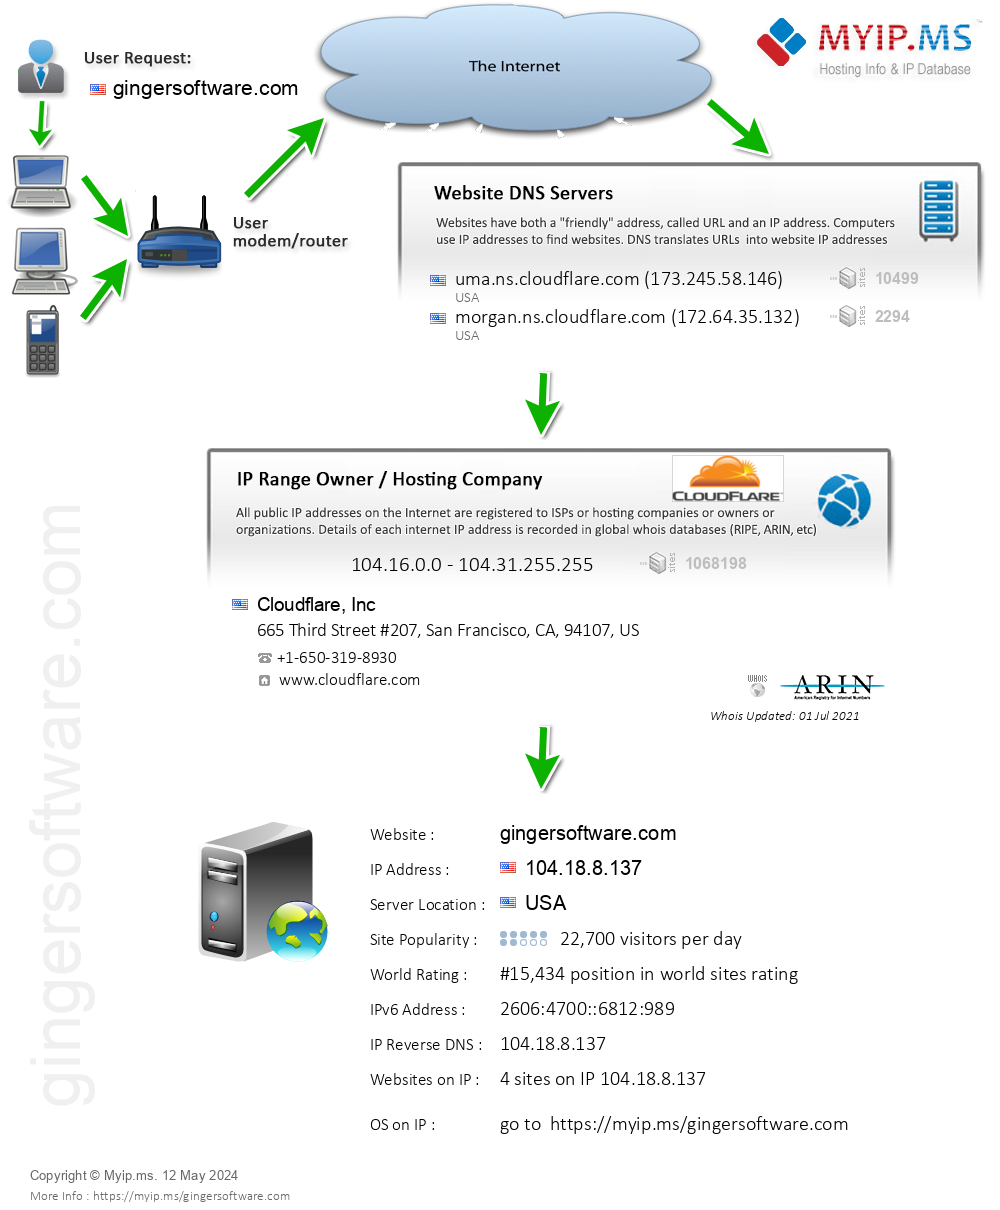 Gingersoftware.com - Website Hosting Visual IP Diagram